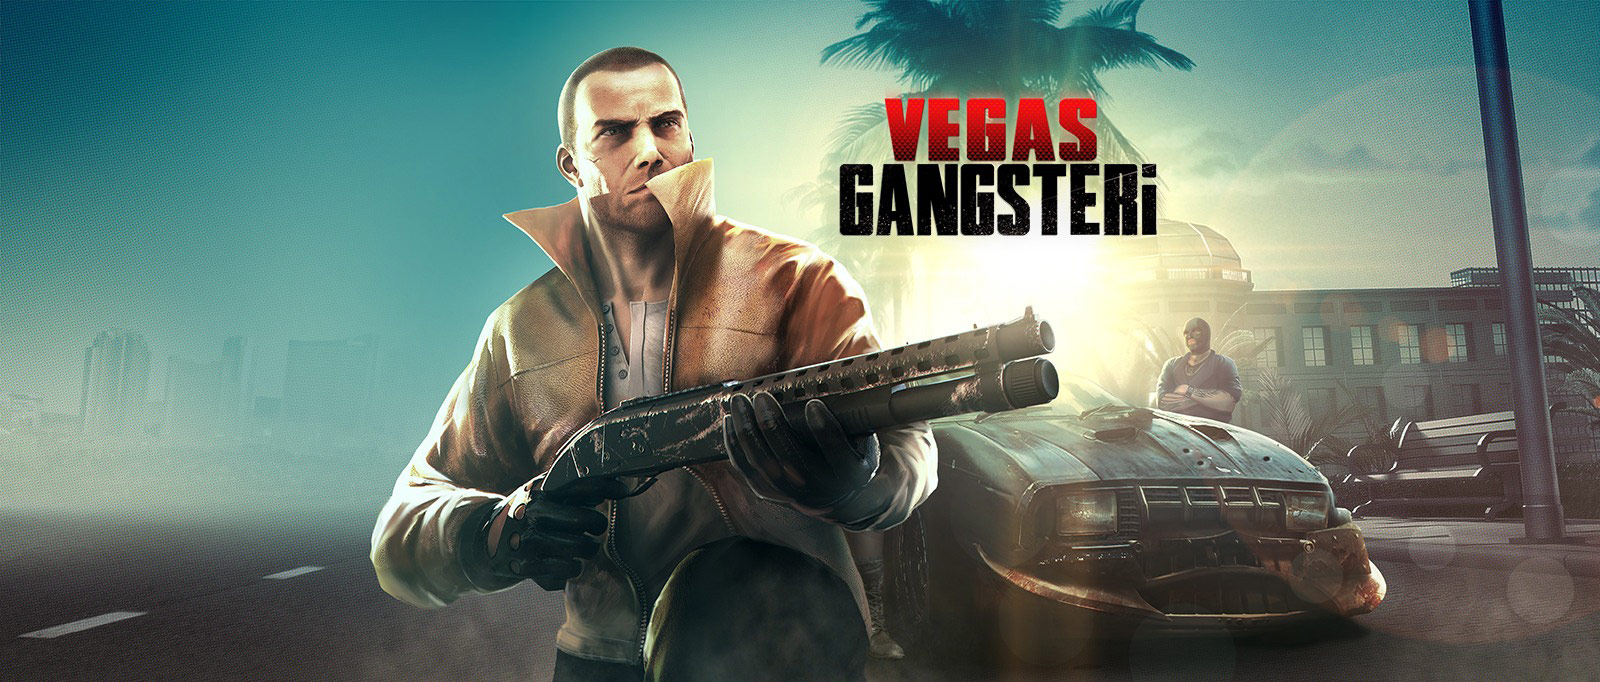 Vegas Gangsteri